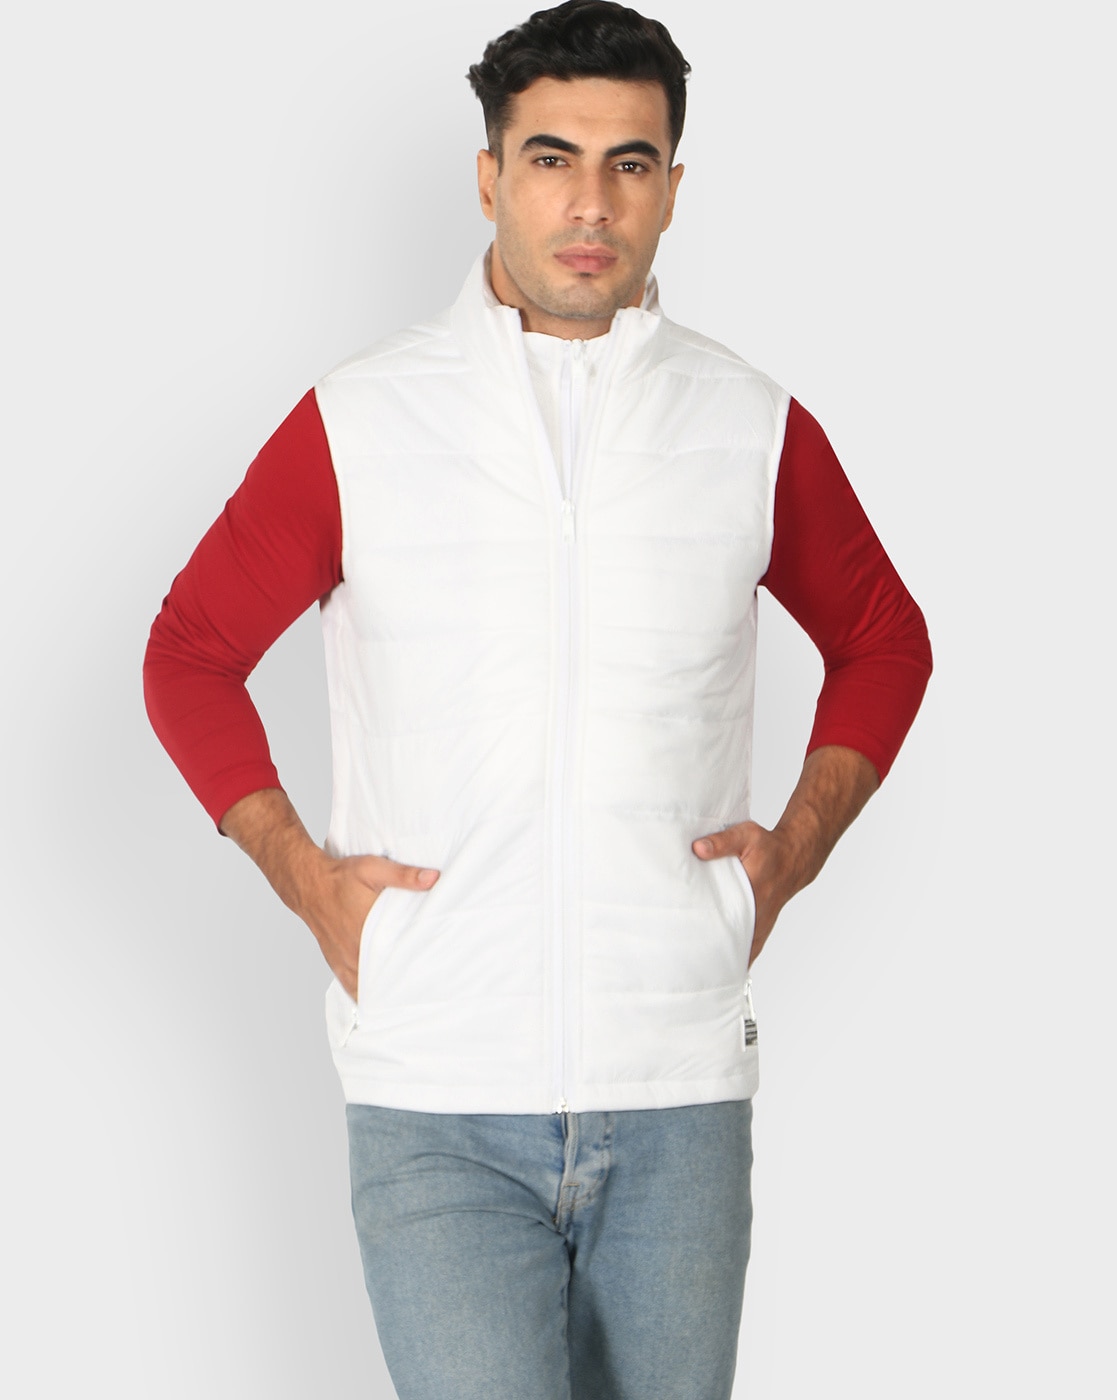 Octave Jackets Sweatshirts - Buy Octave Jackets Sweatshirts online in India